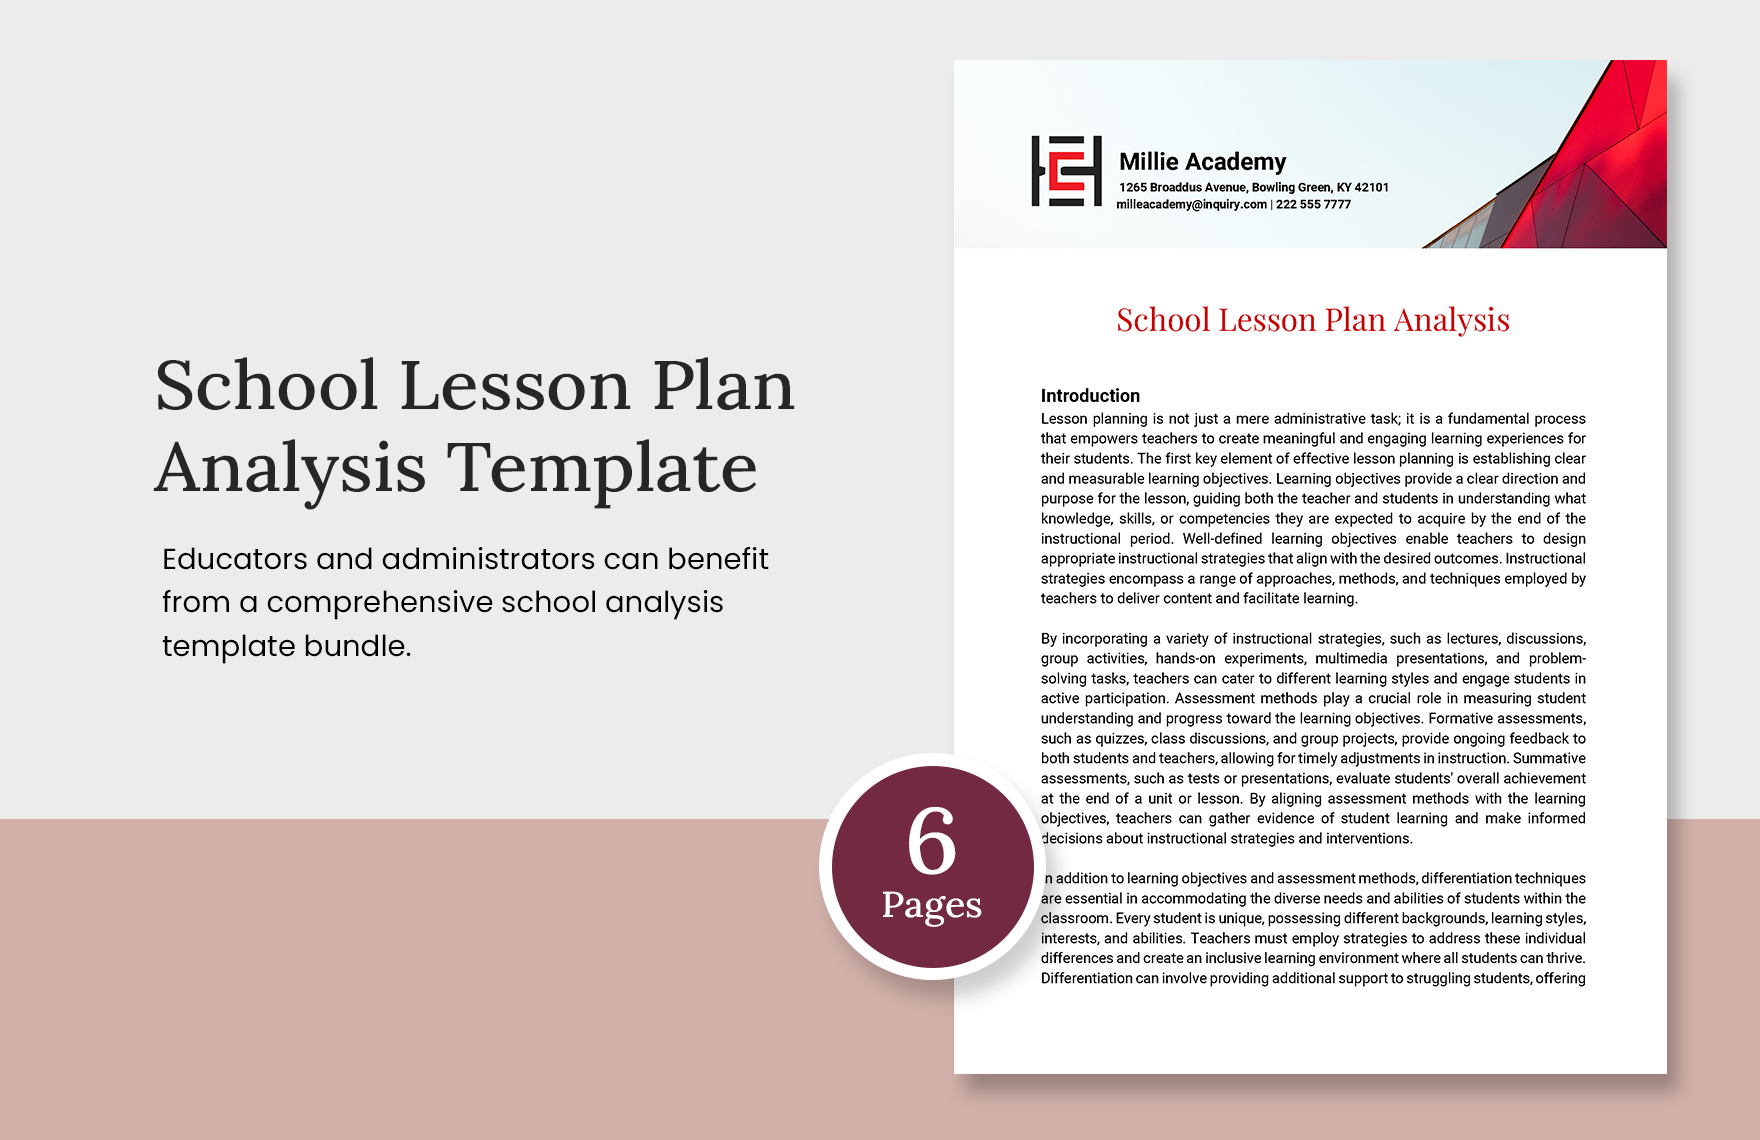 School Lesson Plan Analysis Template